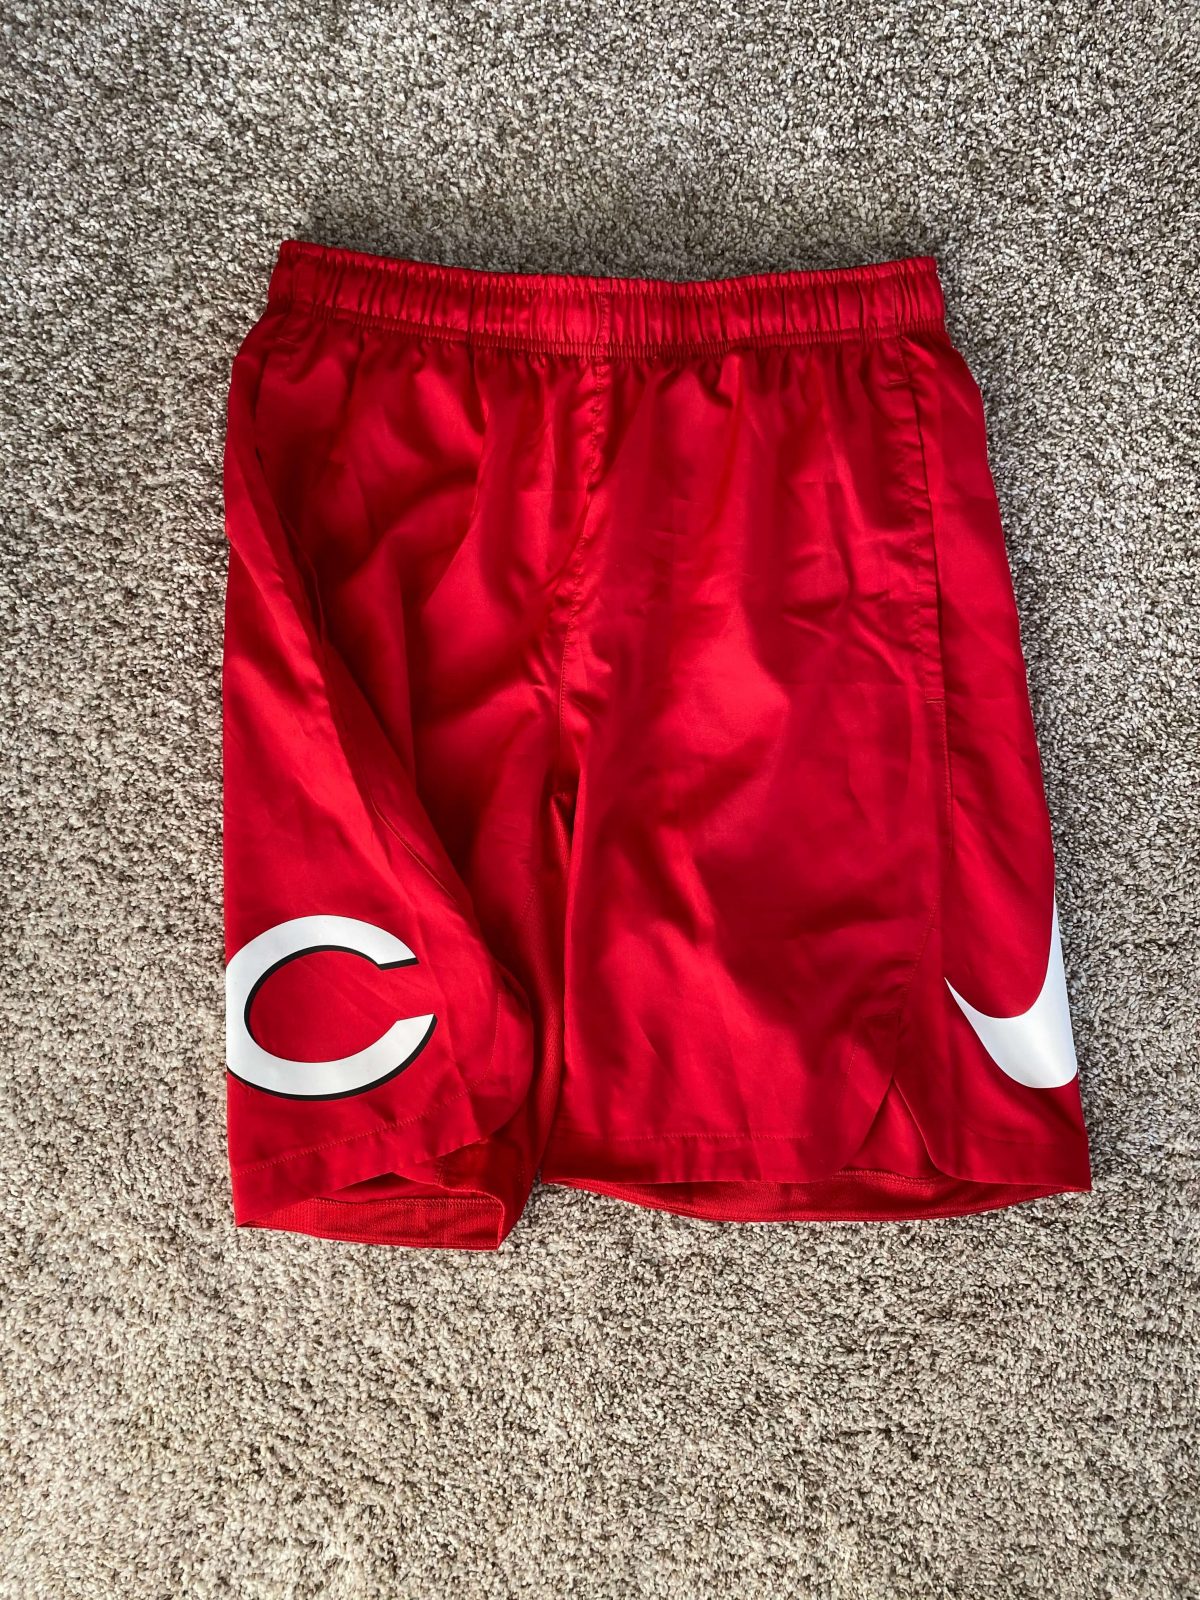 Cincinnati Reds Dri-Fit Shorts : NARP Clothing